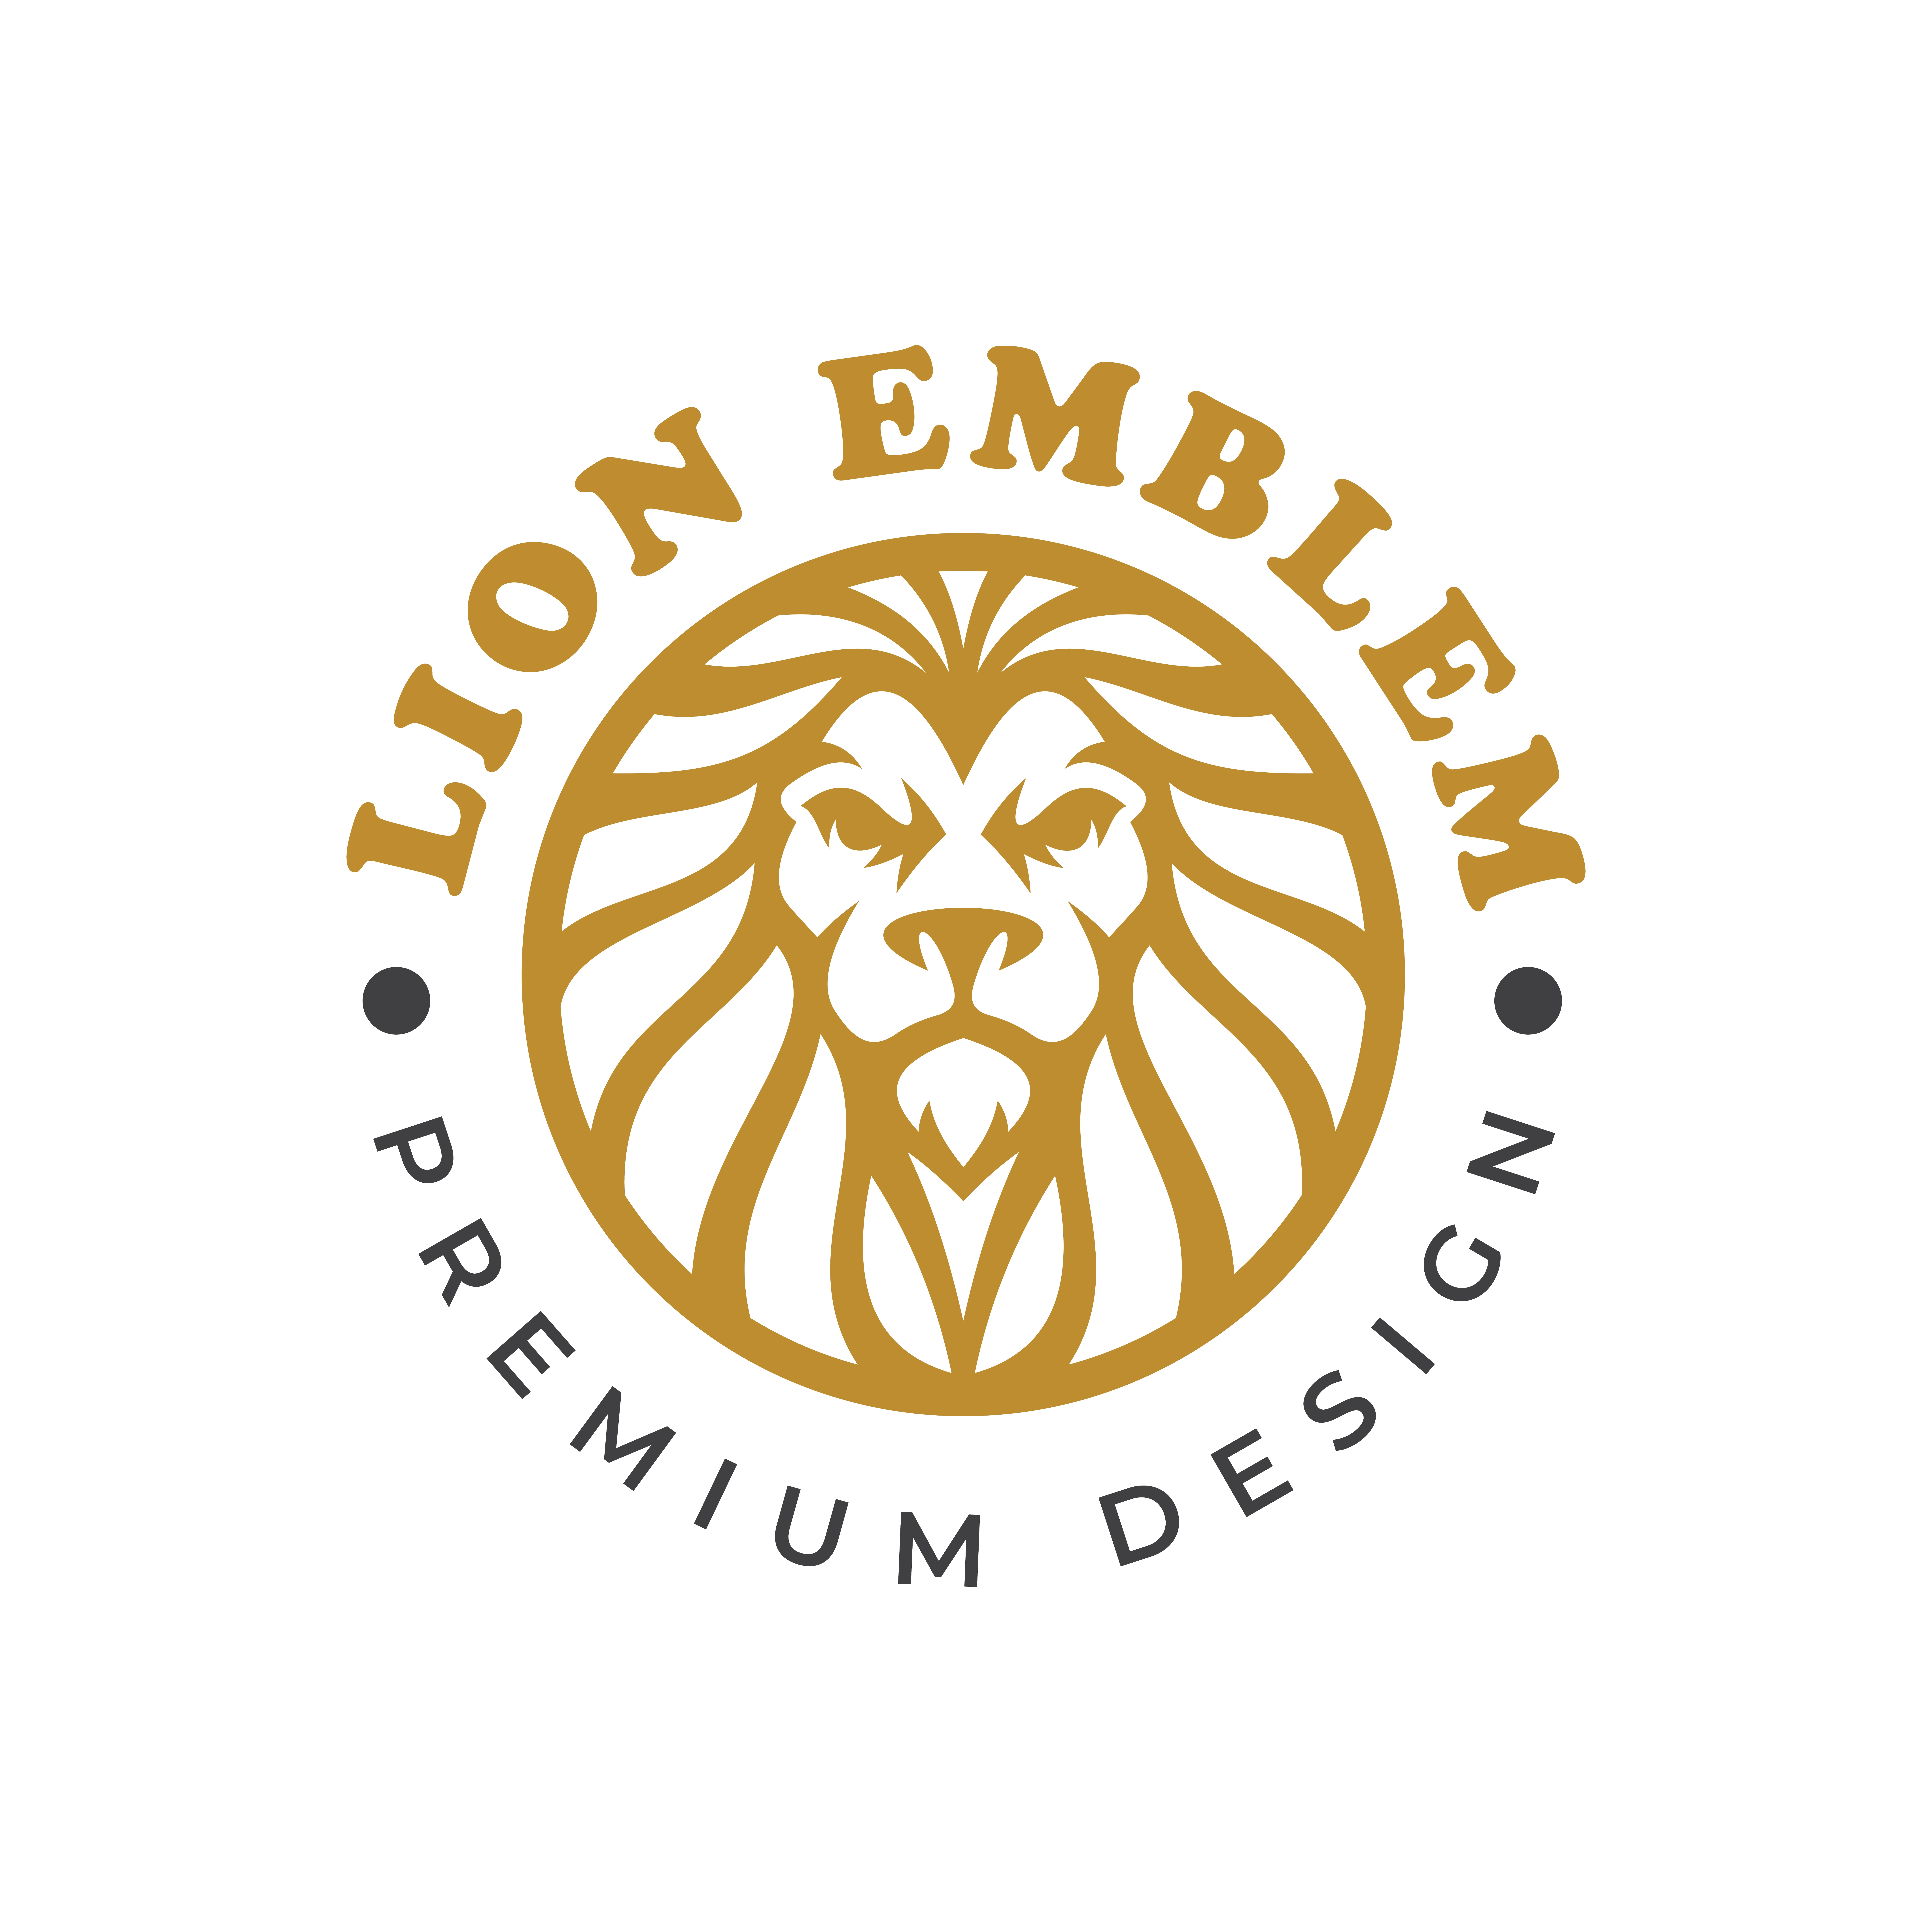 Lion head and circle emblem logo illustration